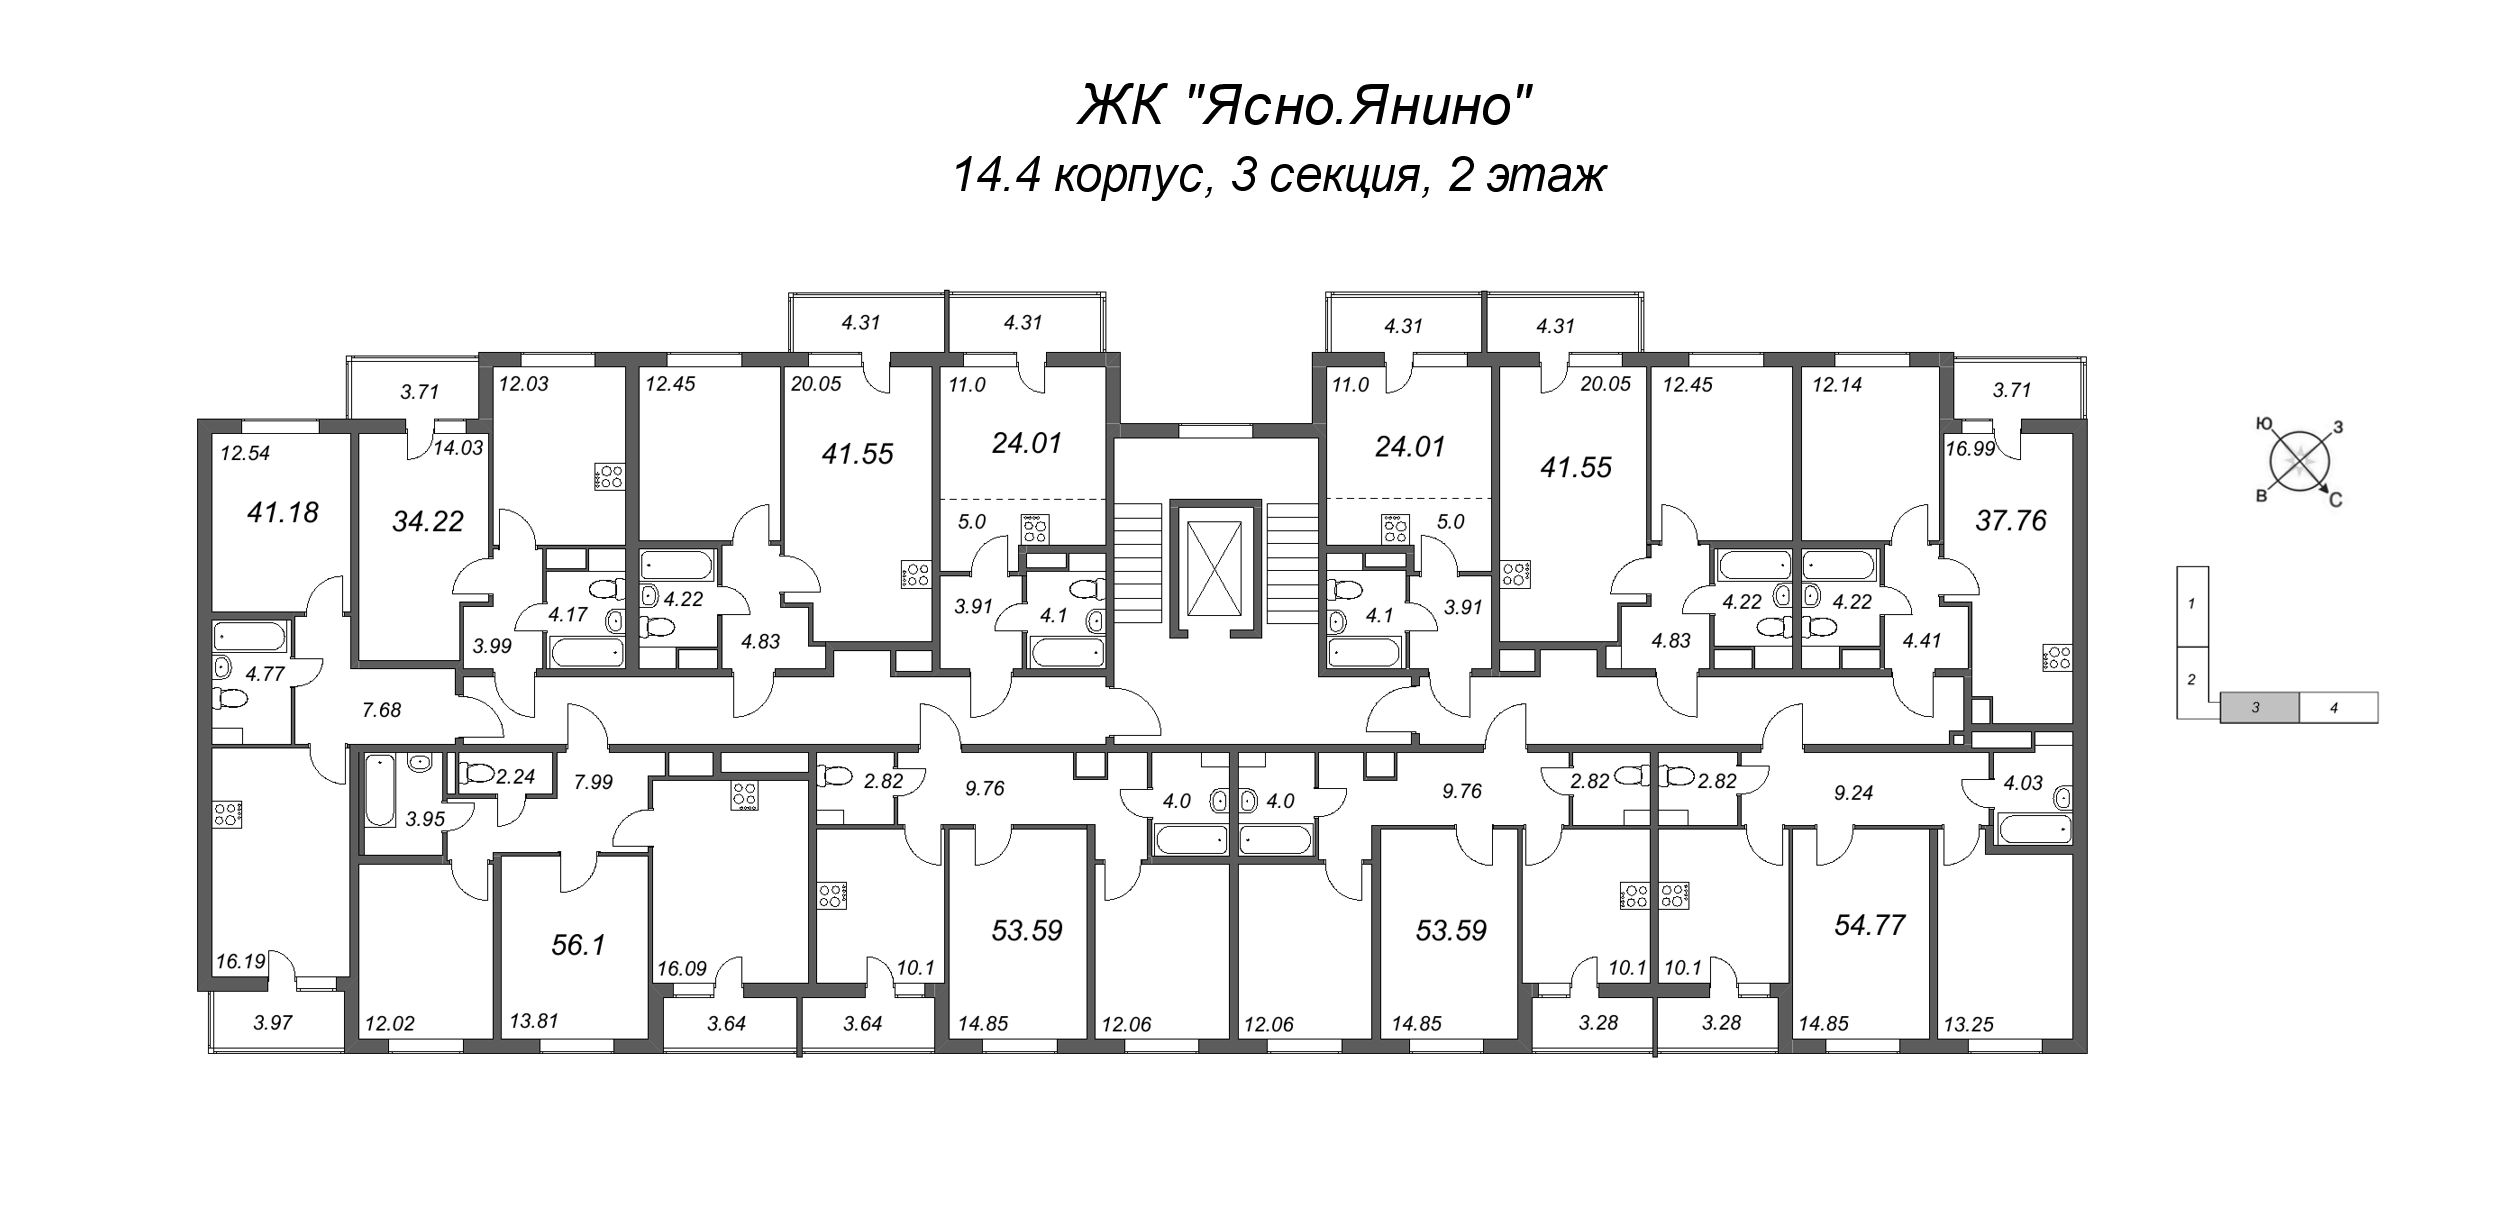 2-комнатная квартира, 54.77 м² в ЖК "Ясно.Янино" - планировка этажа